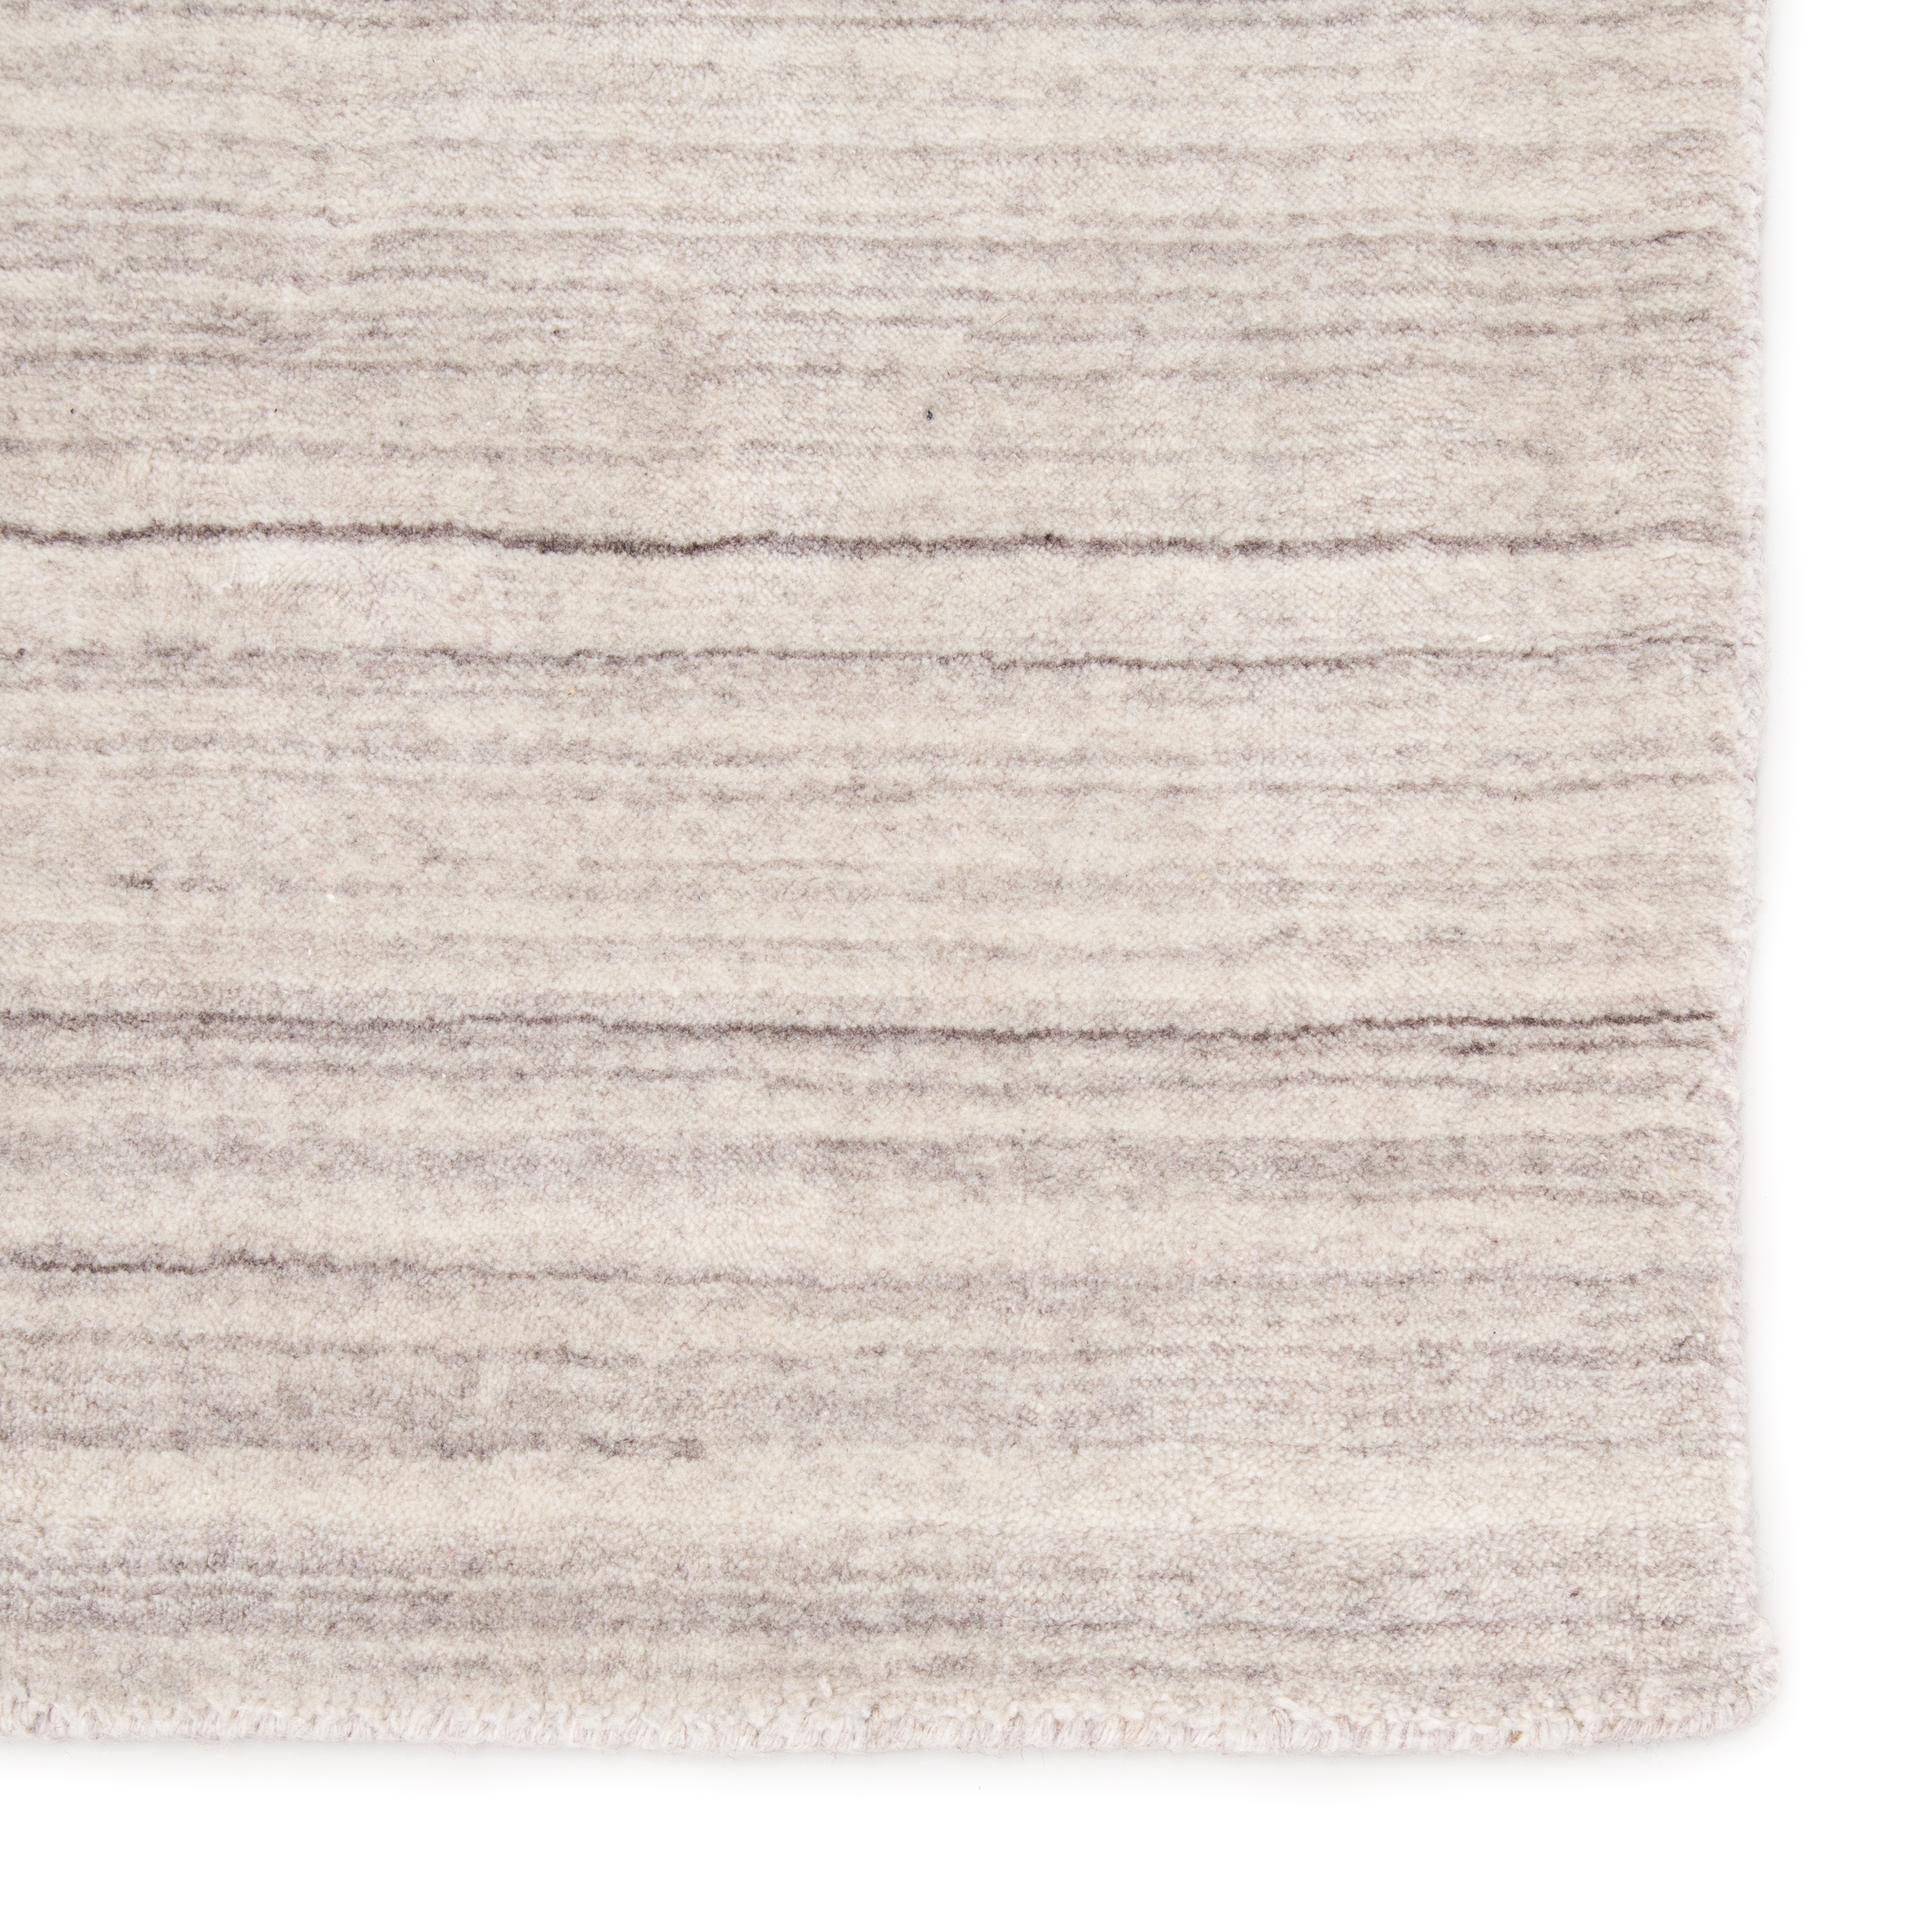 Tundra Handmade Solid White/ Gray Area Rug (9'X12') - Image 3